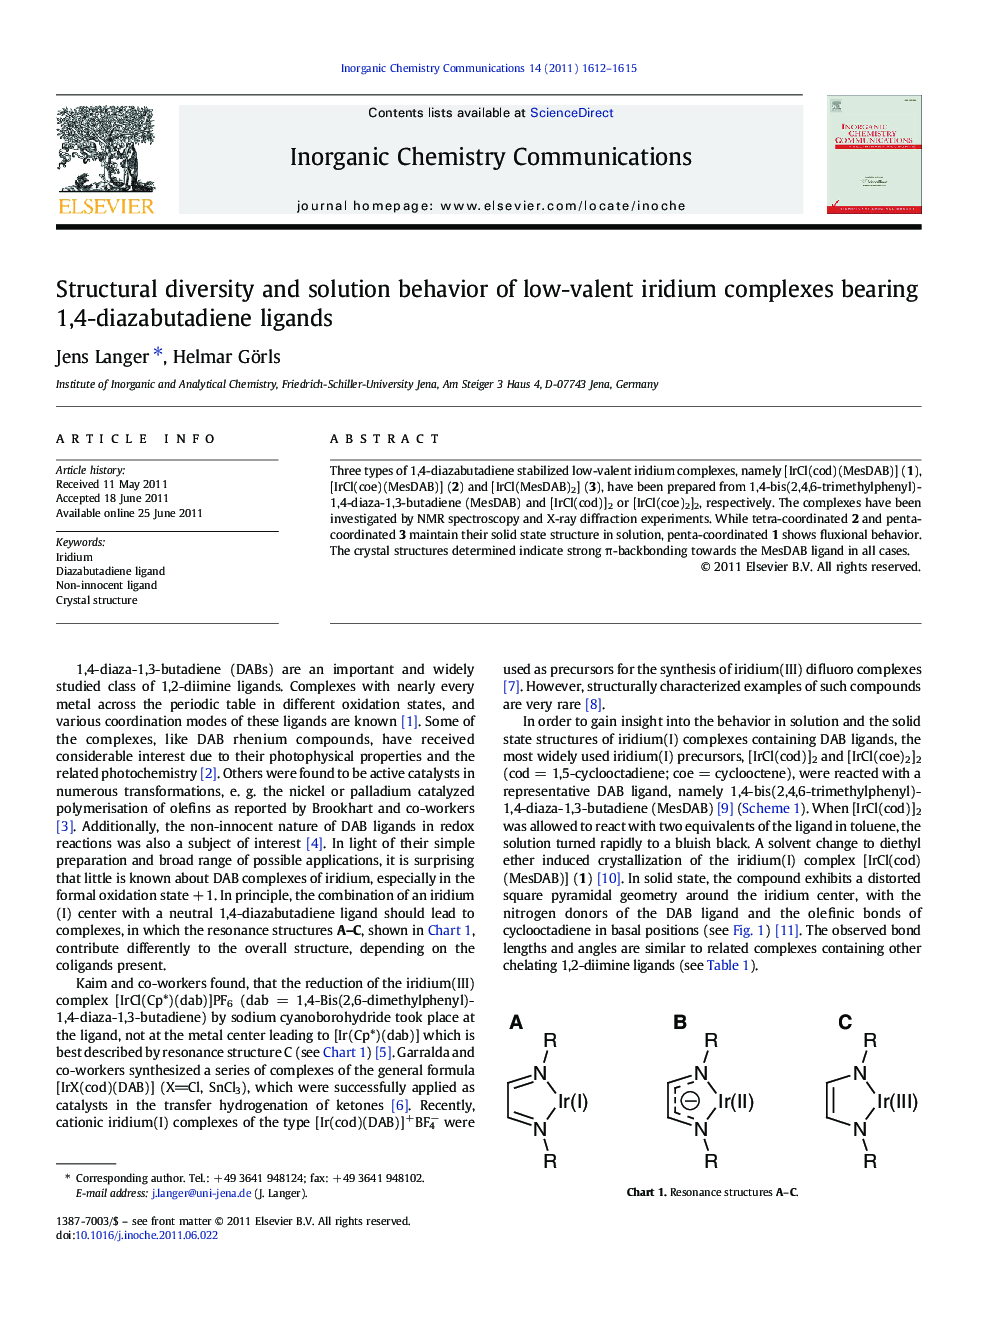 Structural diversity and solution behavior of low-valent iridium complexes bearing 1,4-diazabutadiene ligands